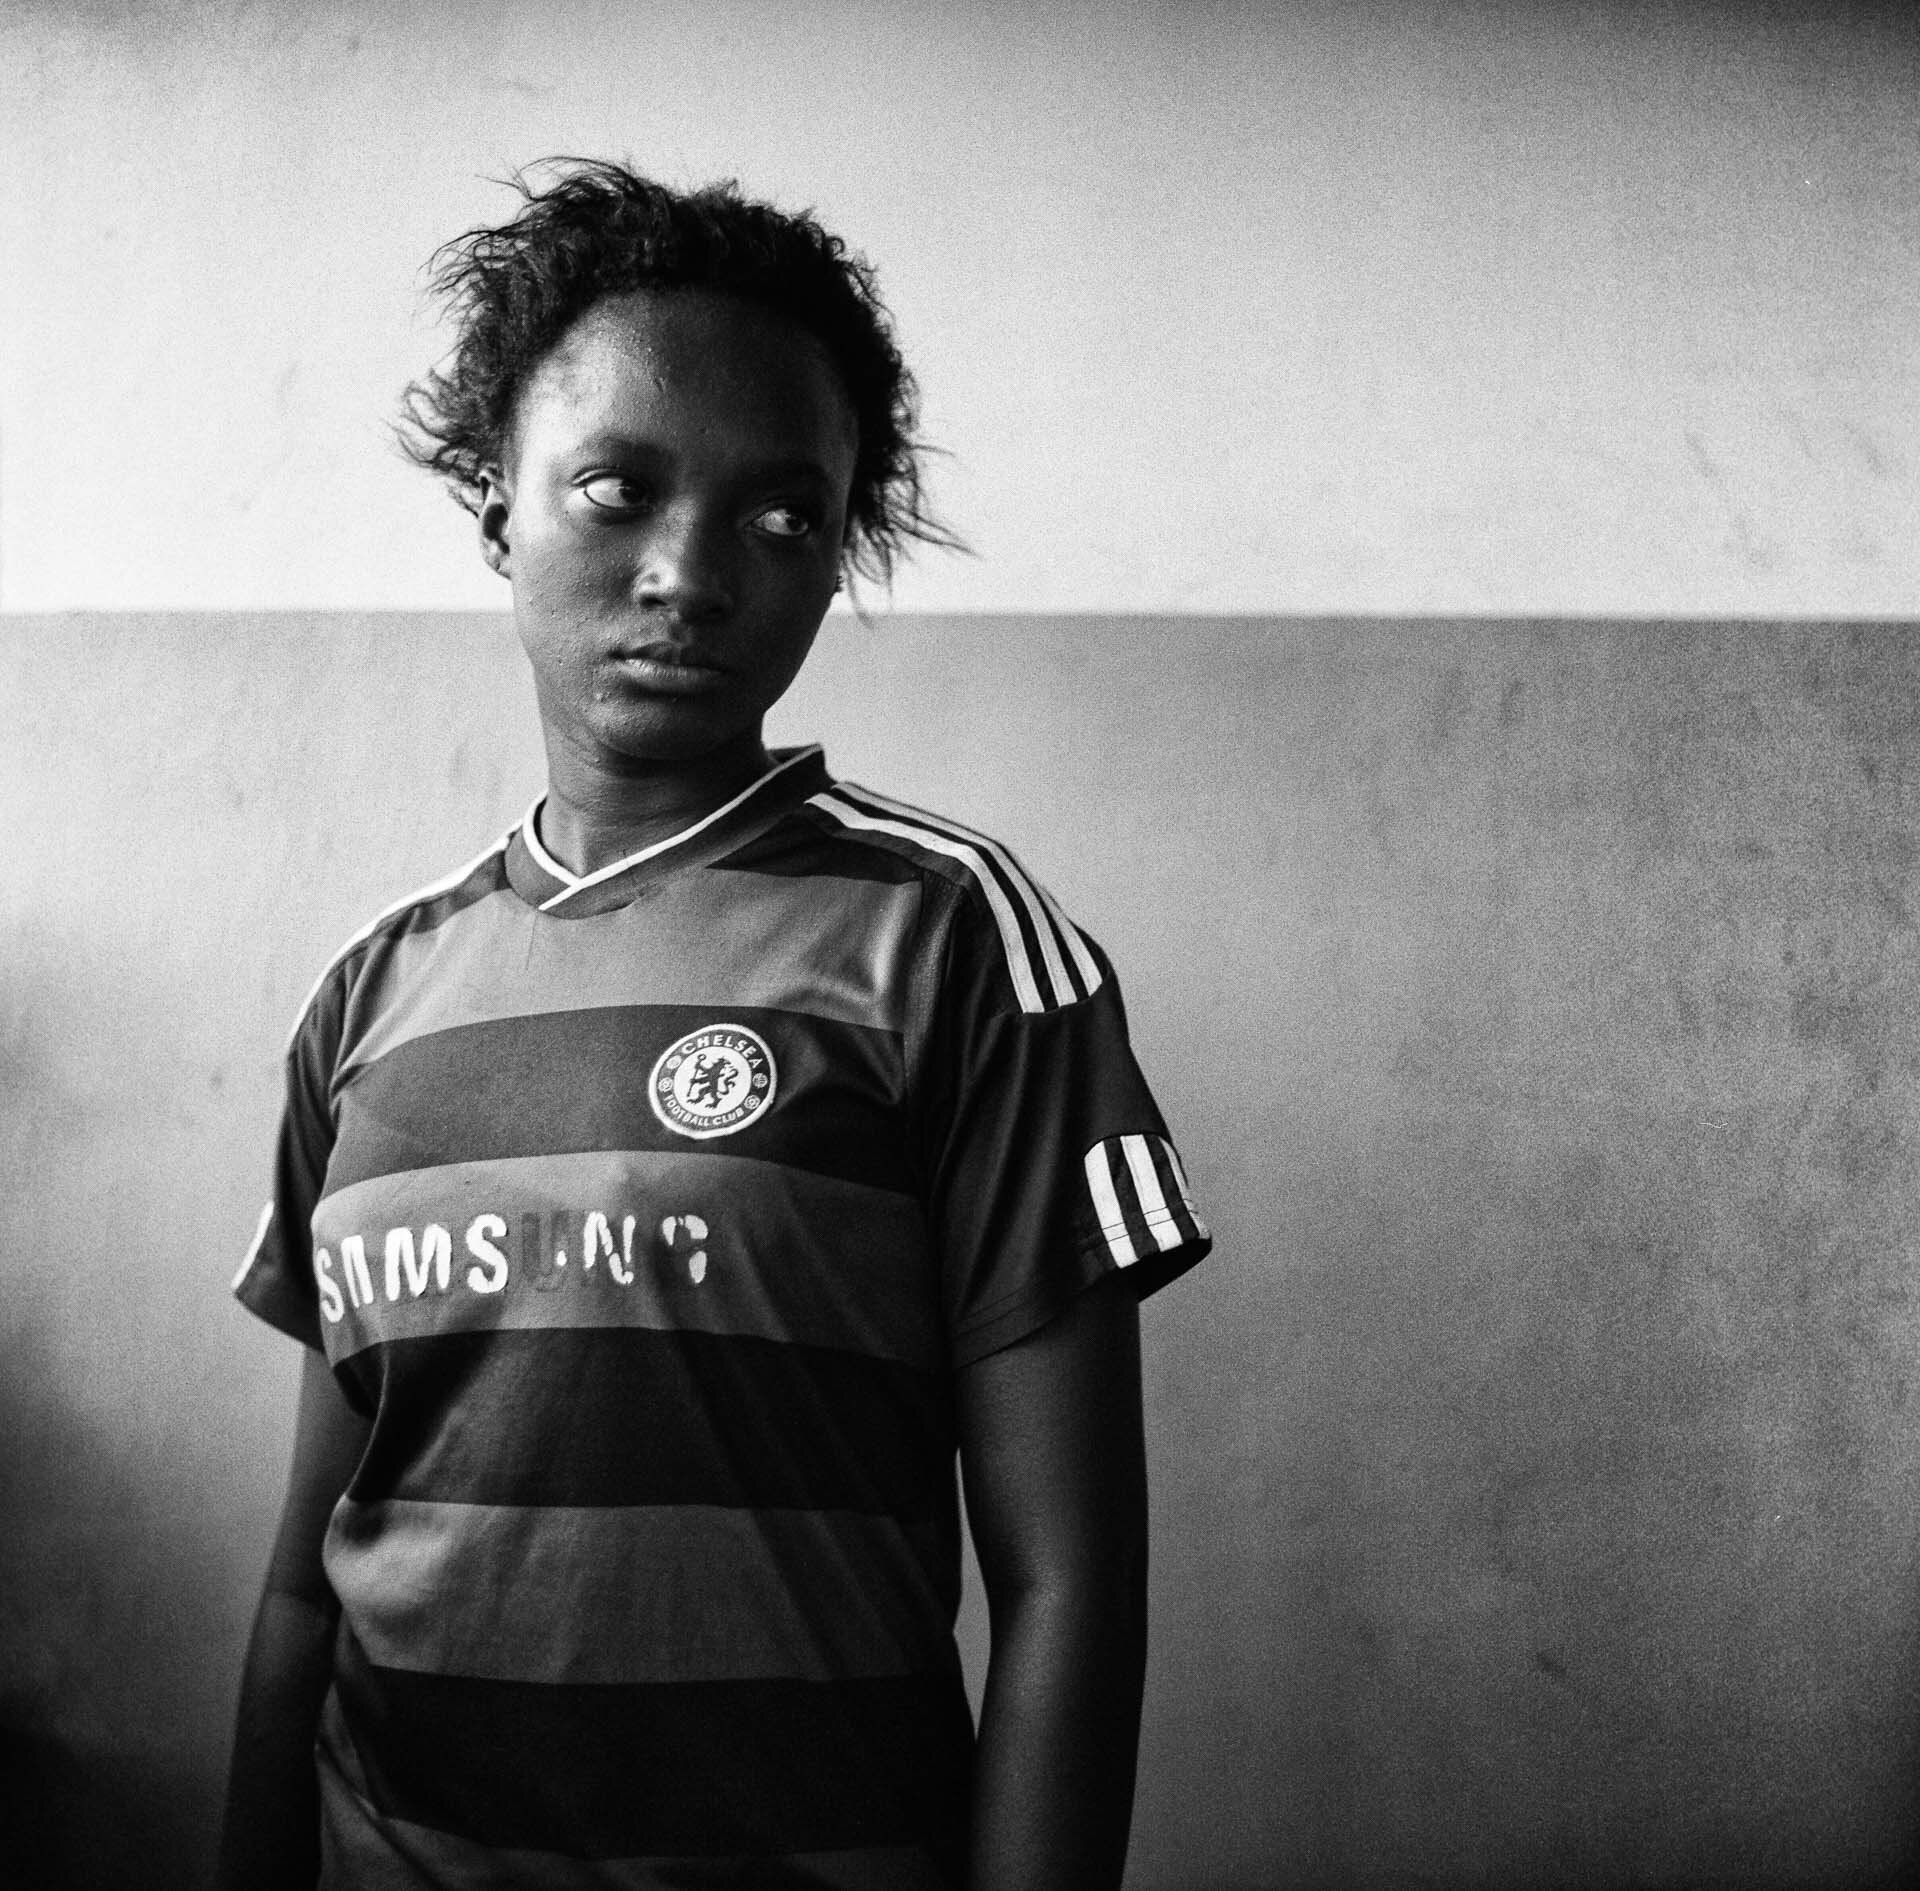 La jeunesse veille au "grain", Bamako, Mali, 2013.